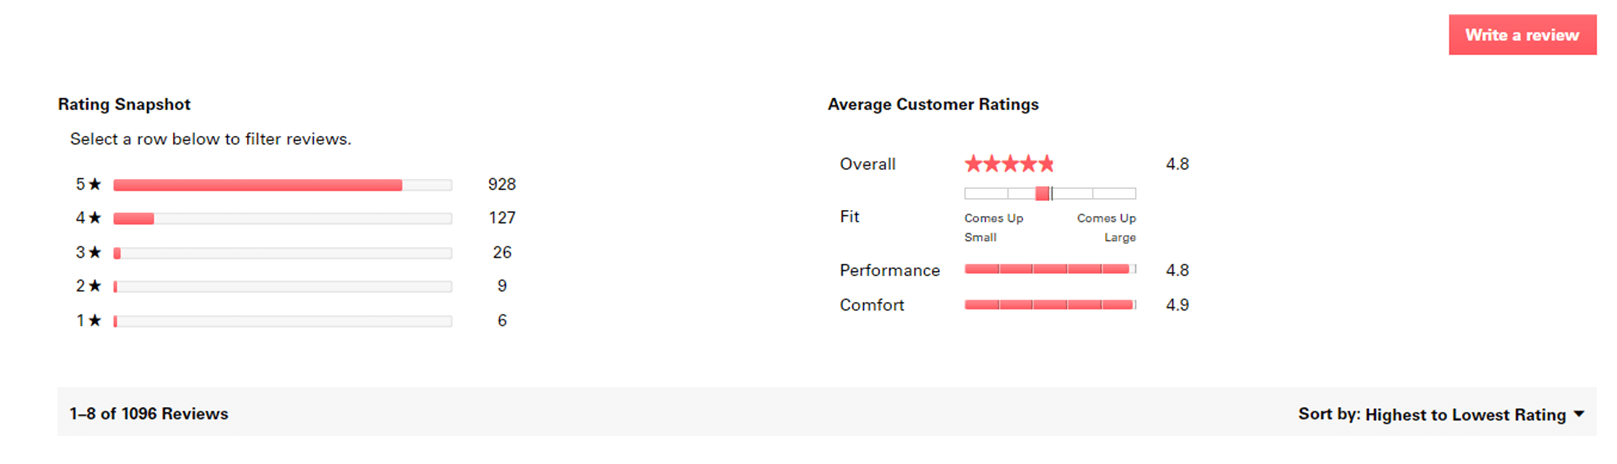 Le Col reviews rating snapshot